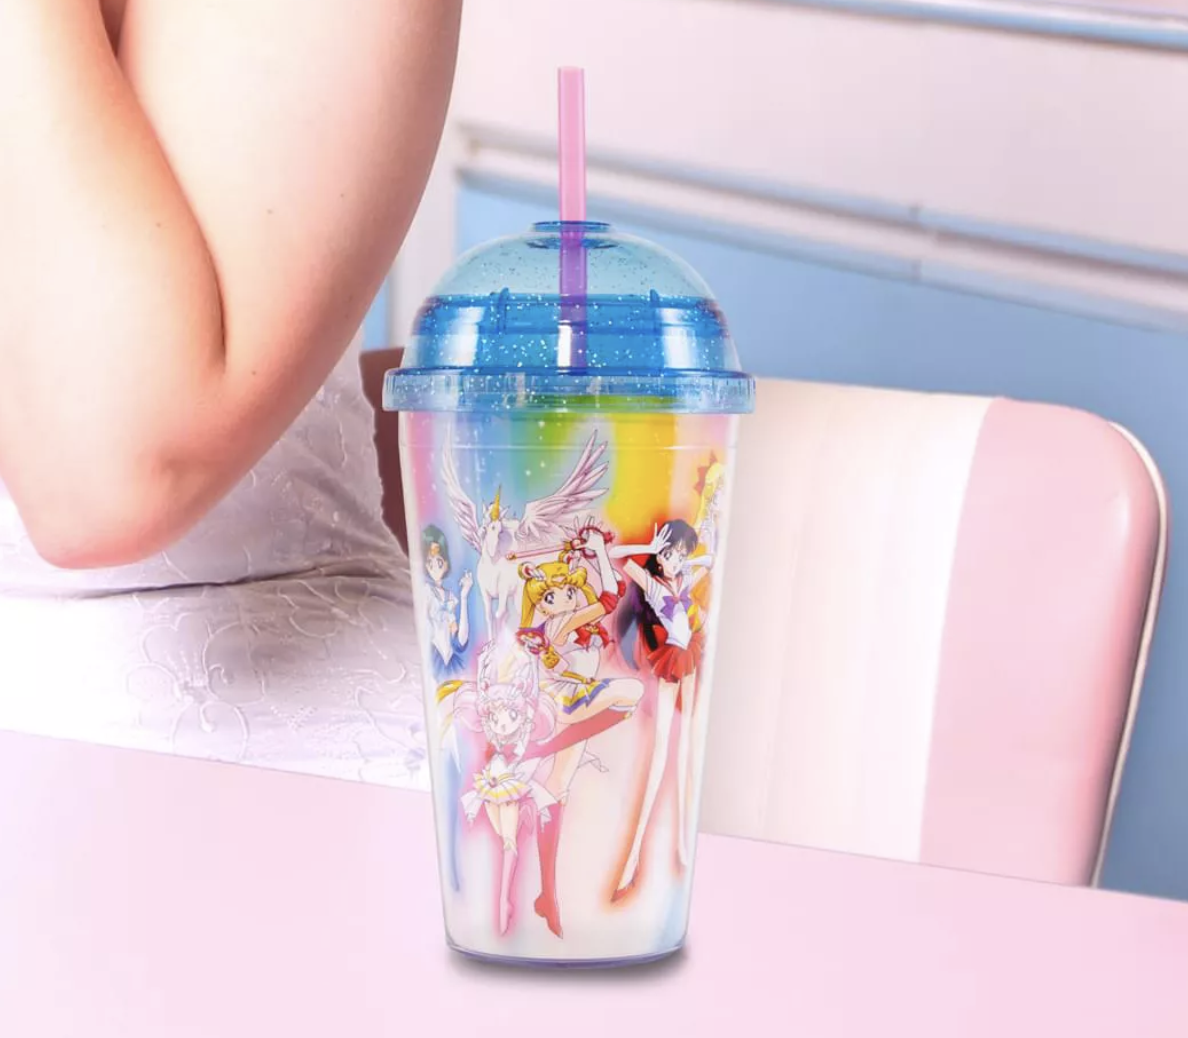 cute sailor moon anime straw cover